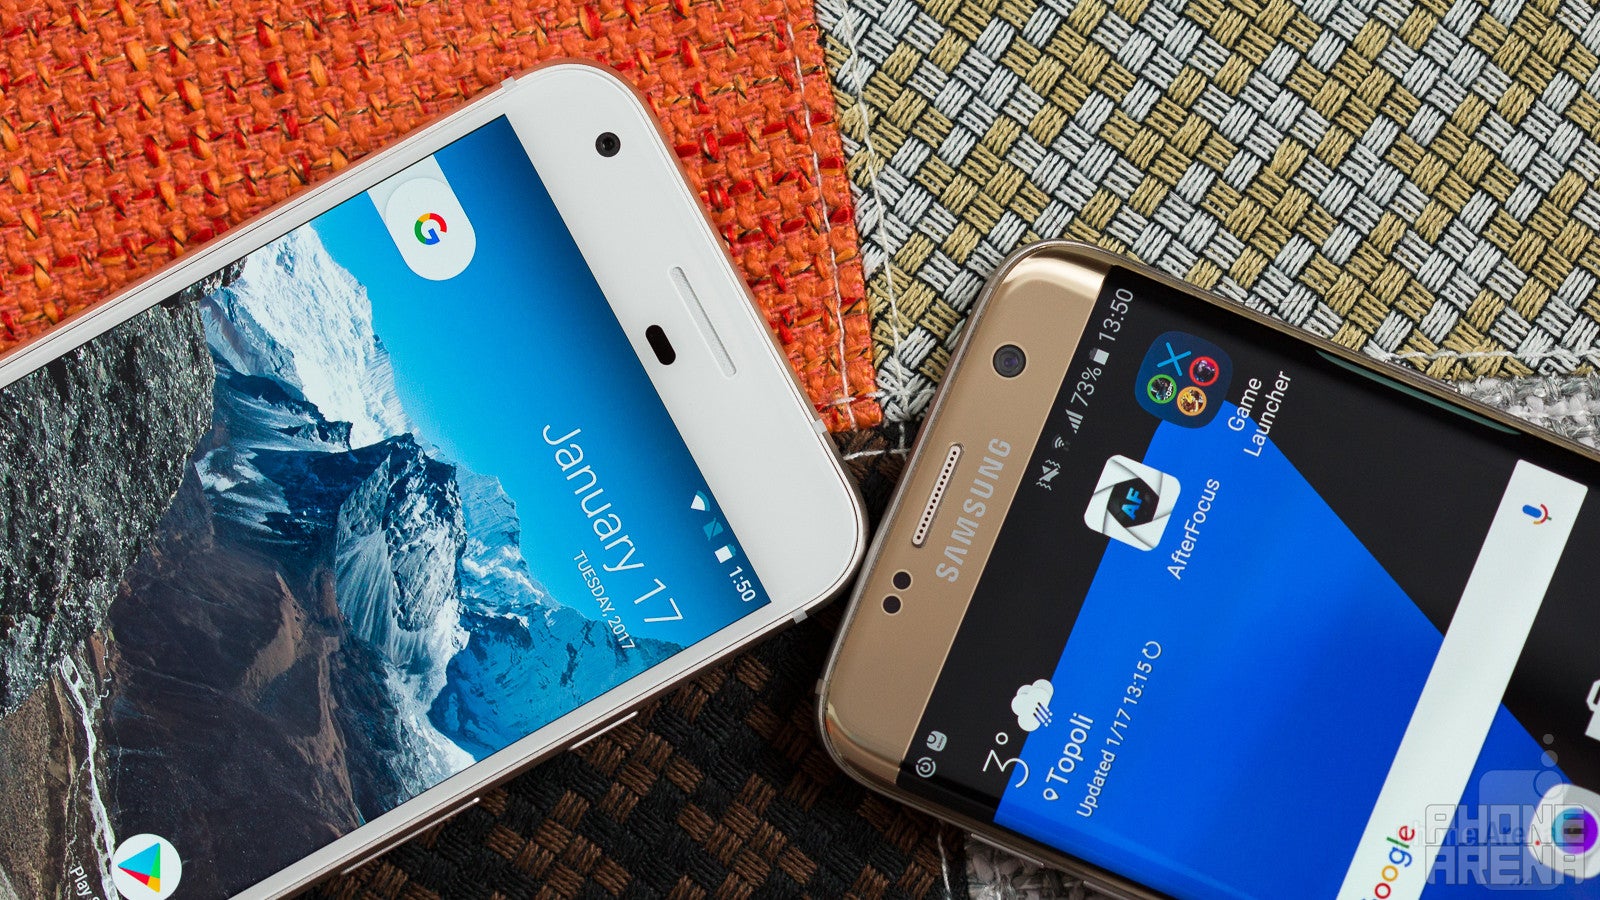 Google Pixel XL vs Samsung Galaxy S7 Edge